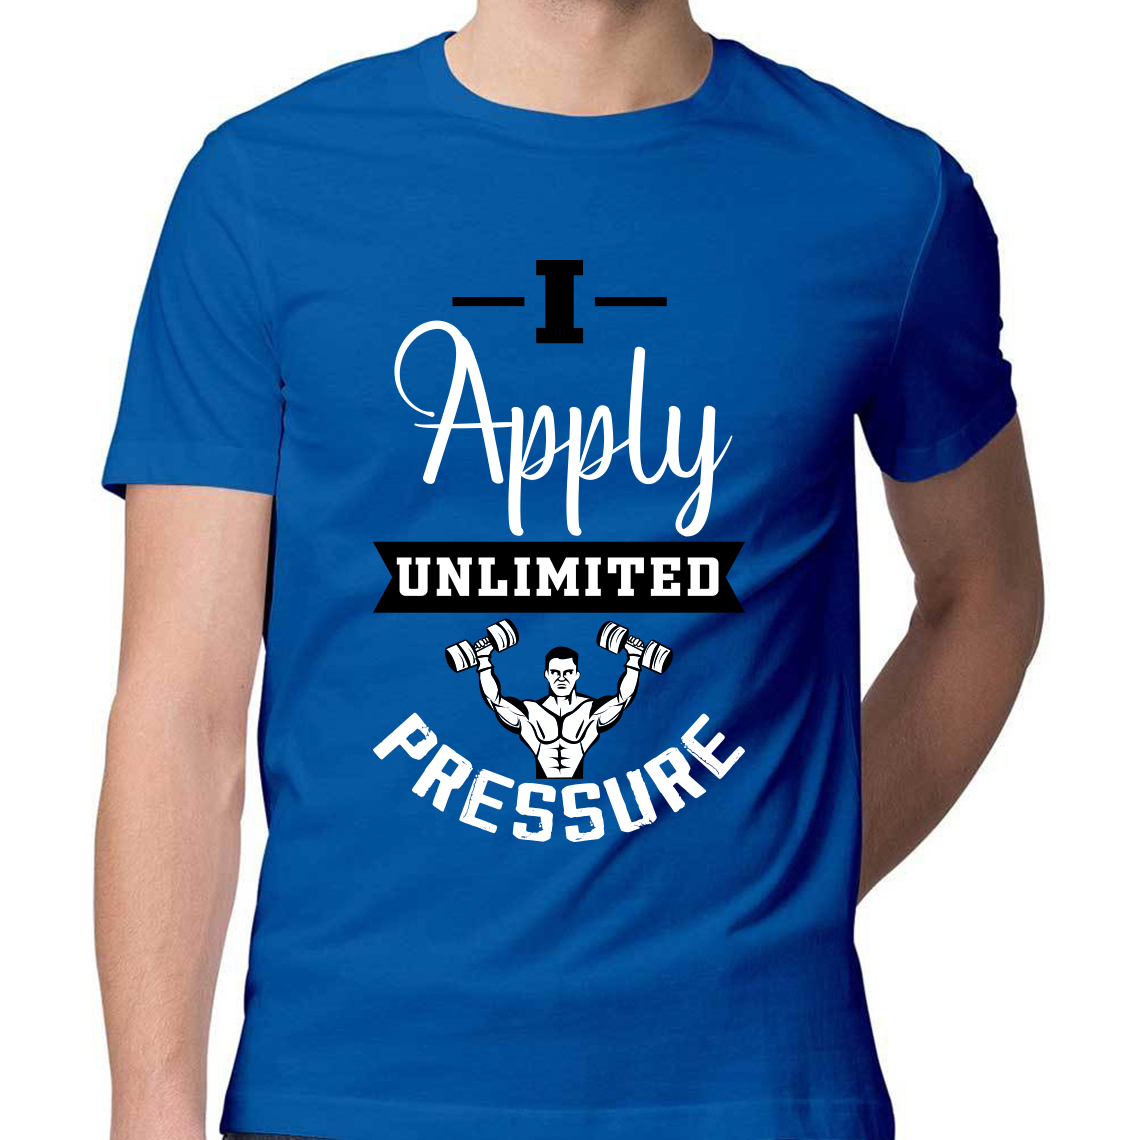 t shirt design for i apply unlimited pressure